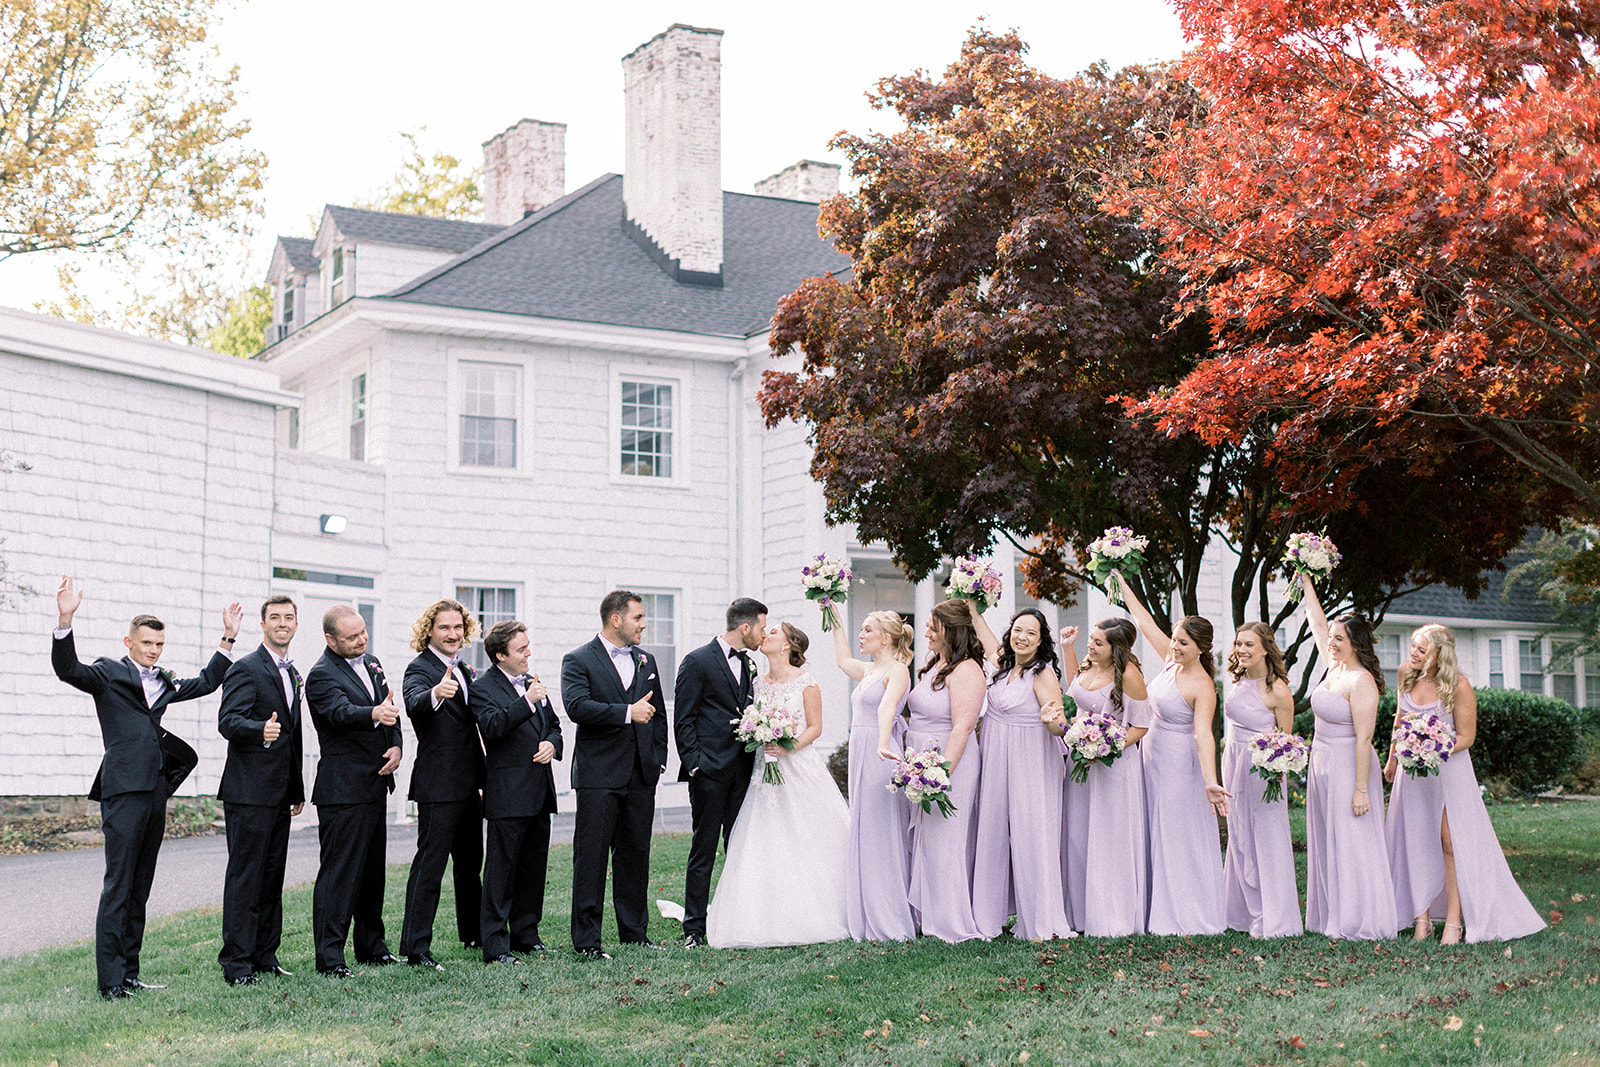 Pennsylvania wedding photographer captures wedding party celebrating bride and groom kiss